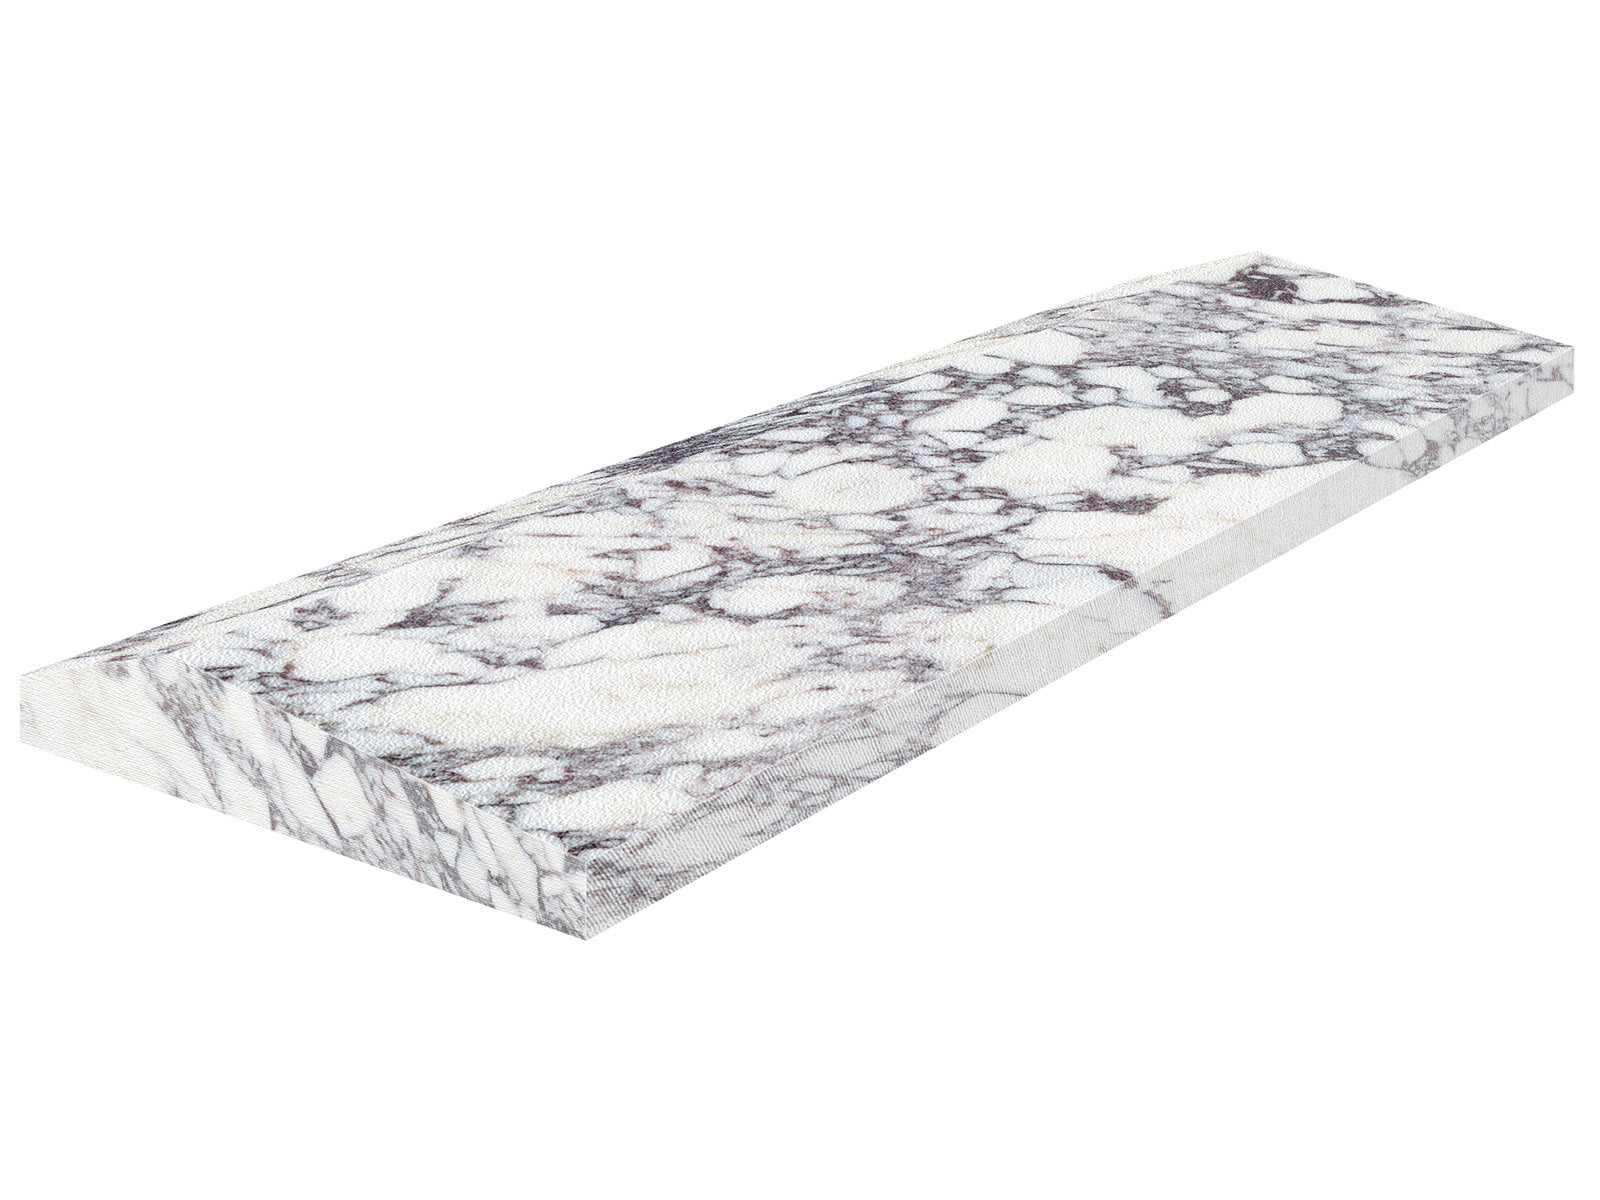 surface group anatolia marble viola roccia natural stone prisma tile honed straight edge rectangle 4х12